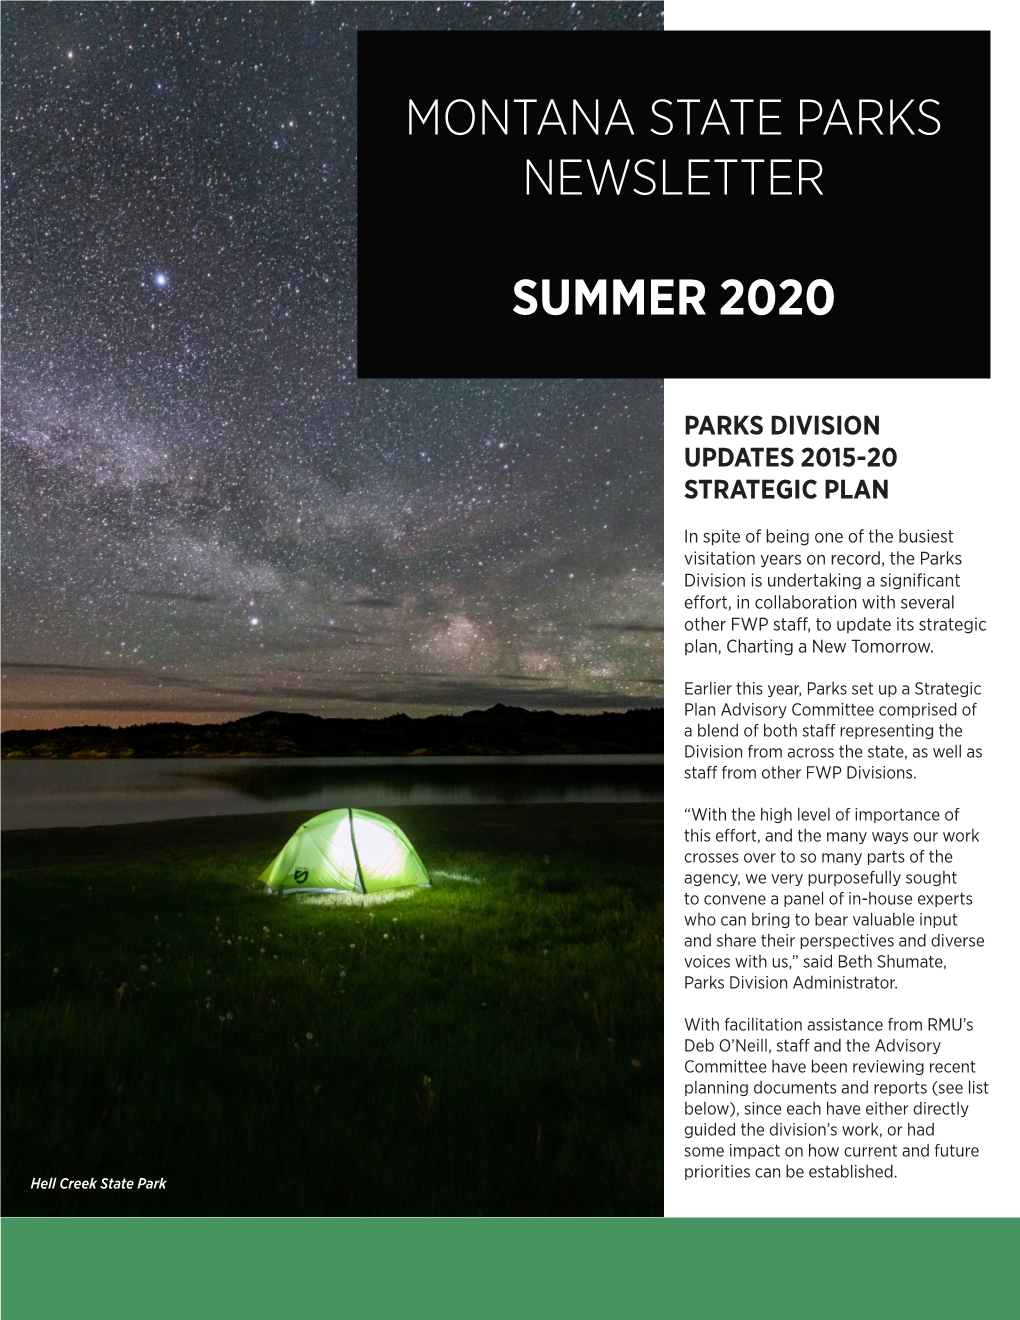 Montana State Parks Newsletter Summer 2020